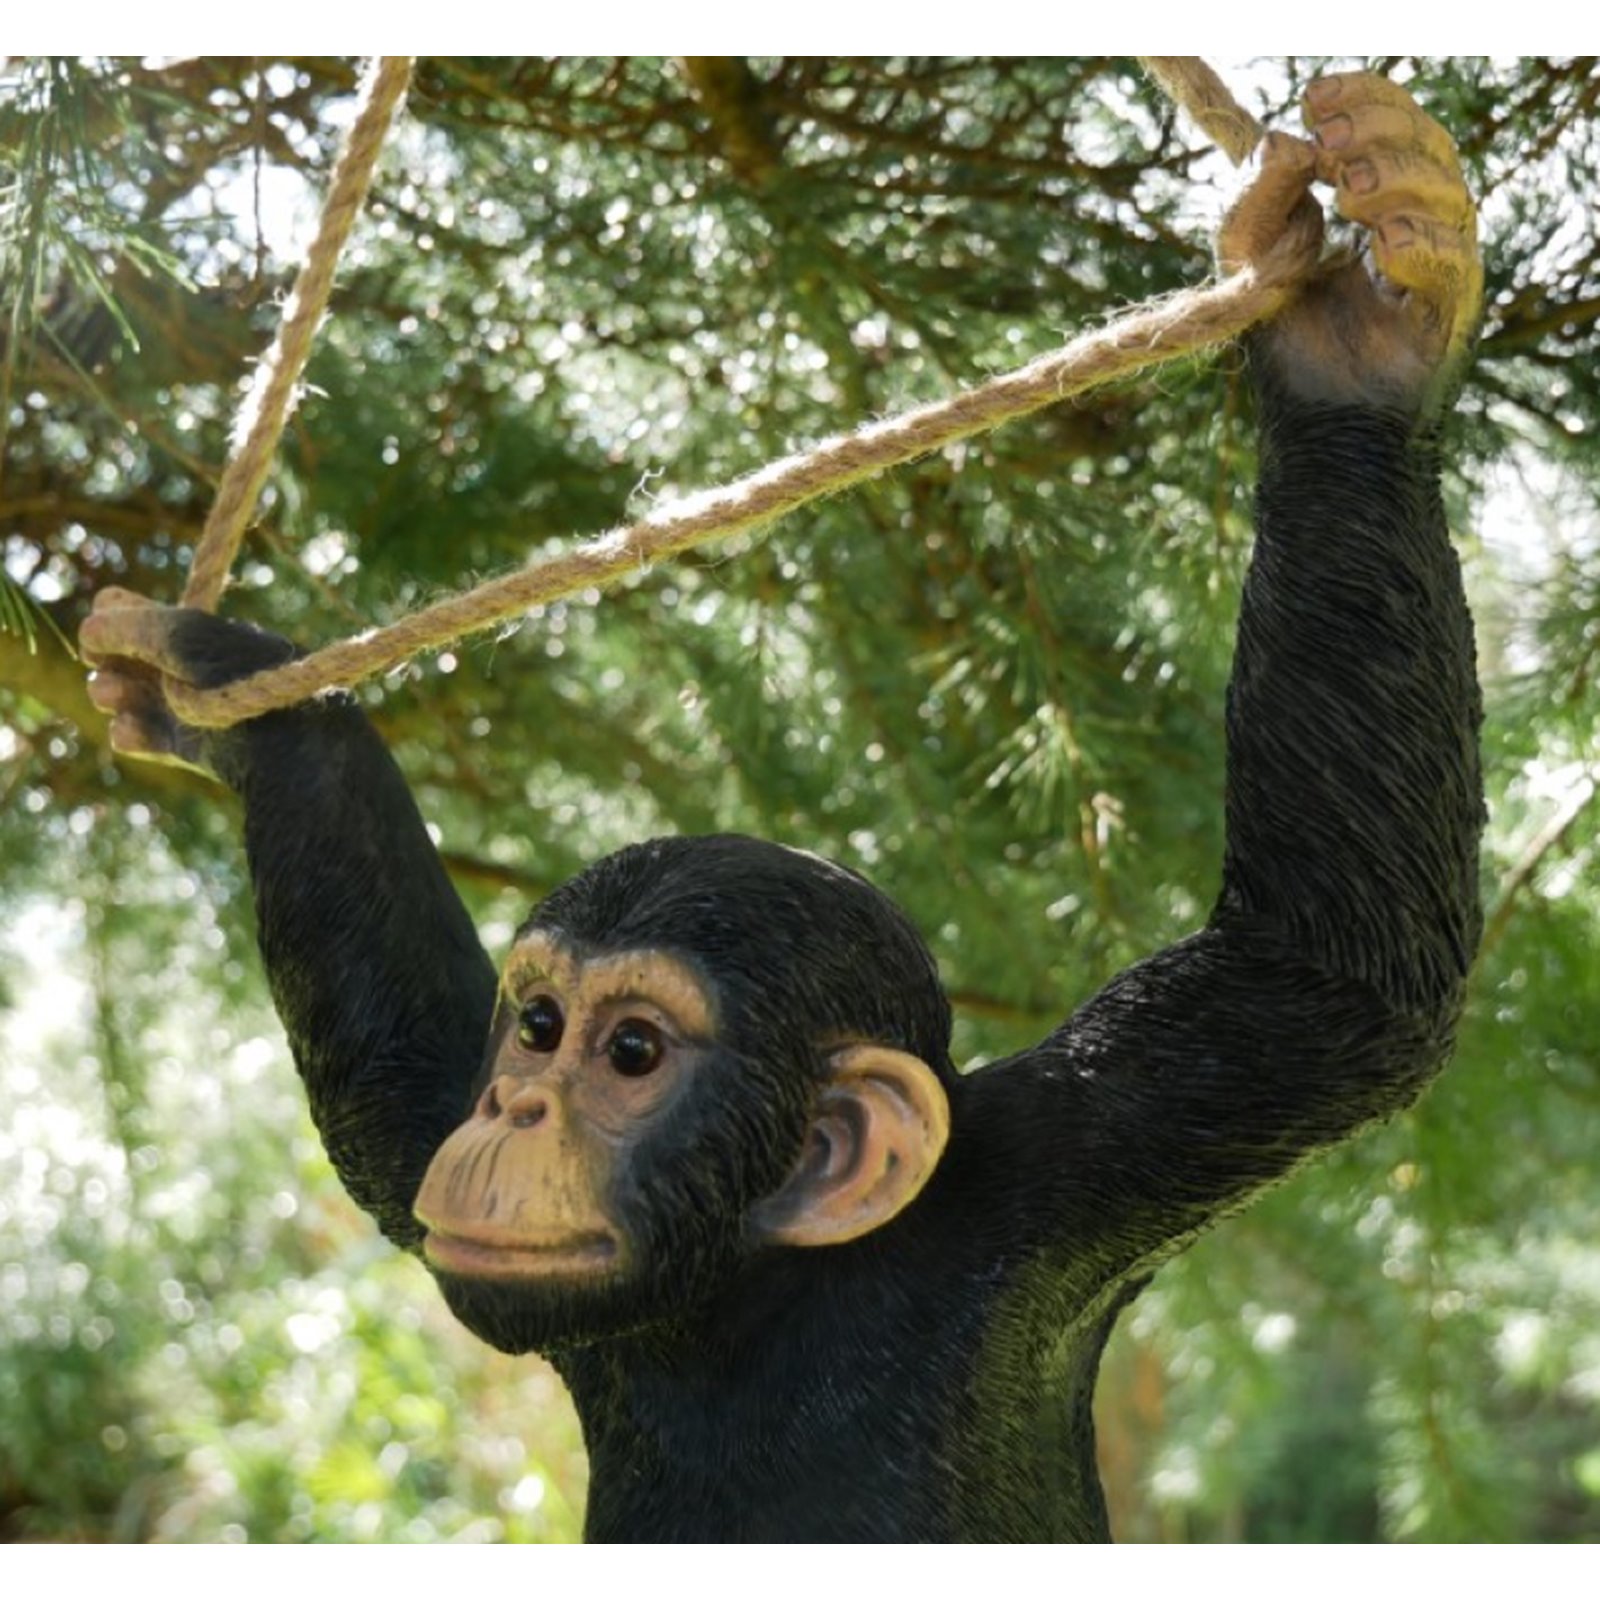 Swinging Monkey Garden Ornament